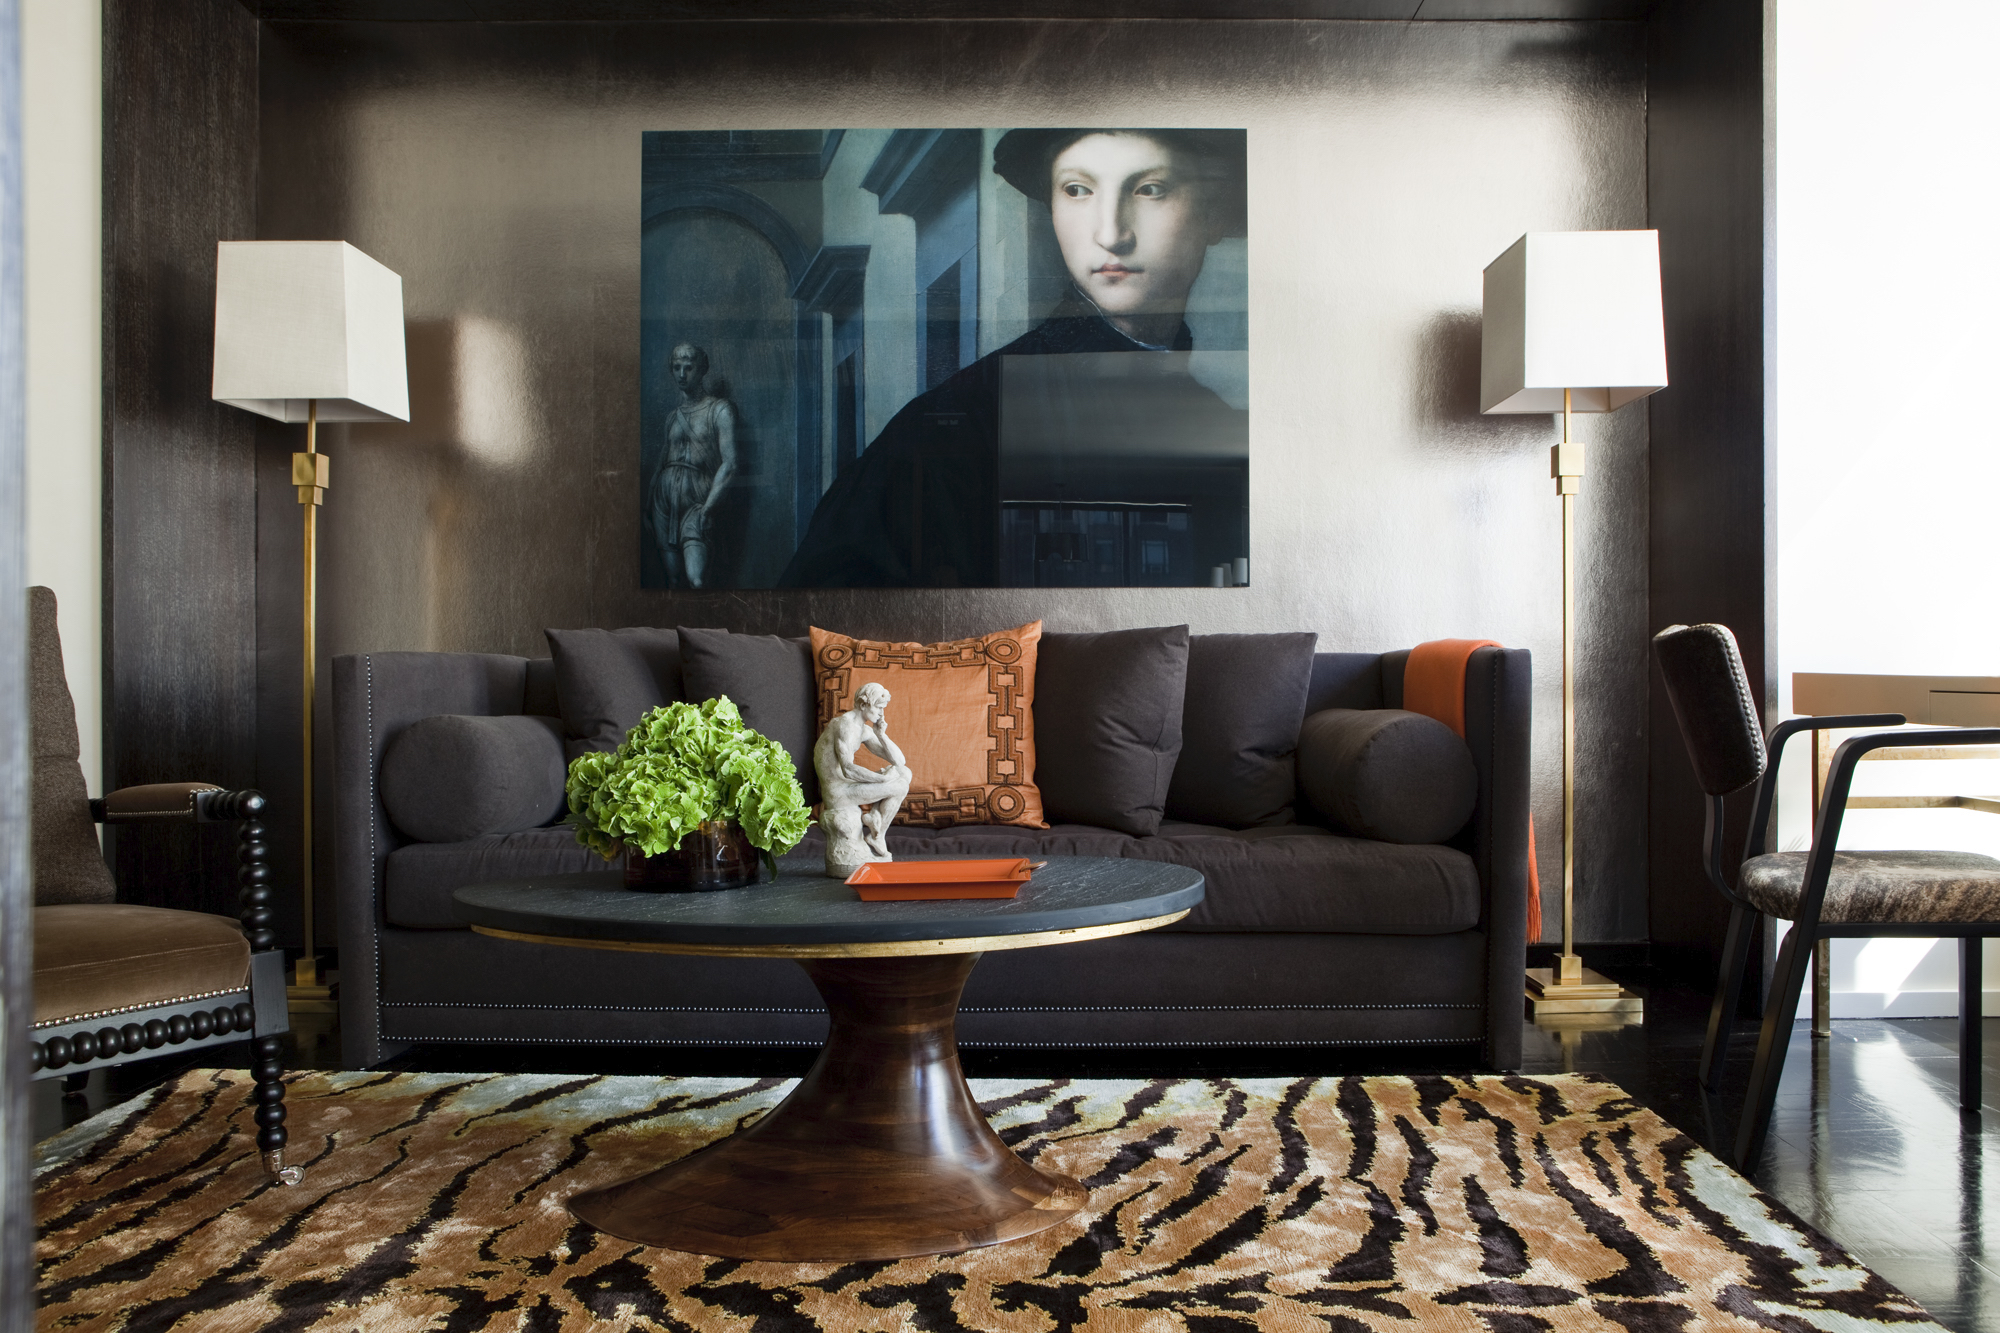 City apartment by Interior designer David Scott in Effect Magazine